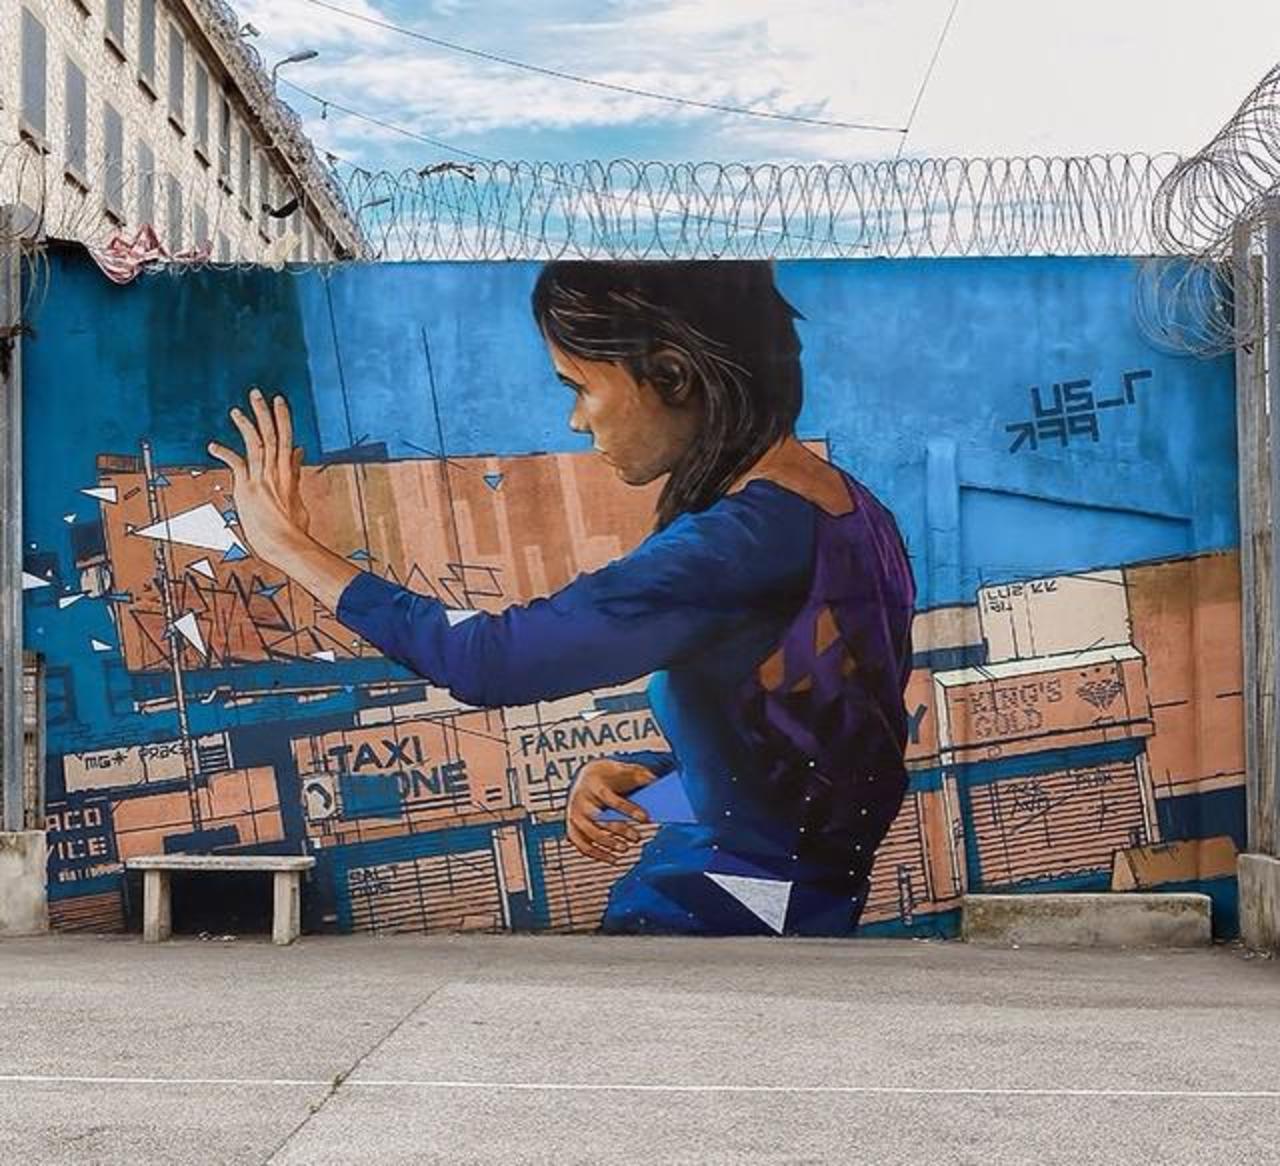 STREET ART - David Mesguich new mural at the Baumettes Prison of Marseille, France 

#art #arte #graffiti #streetart http://t.co/Knqp9FYao2